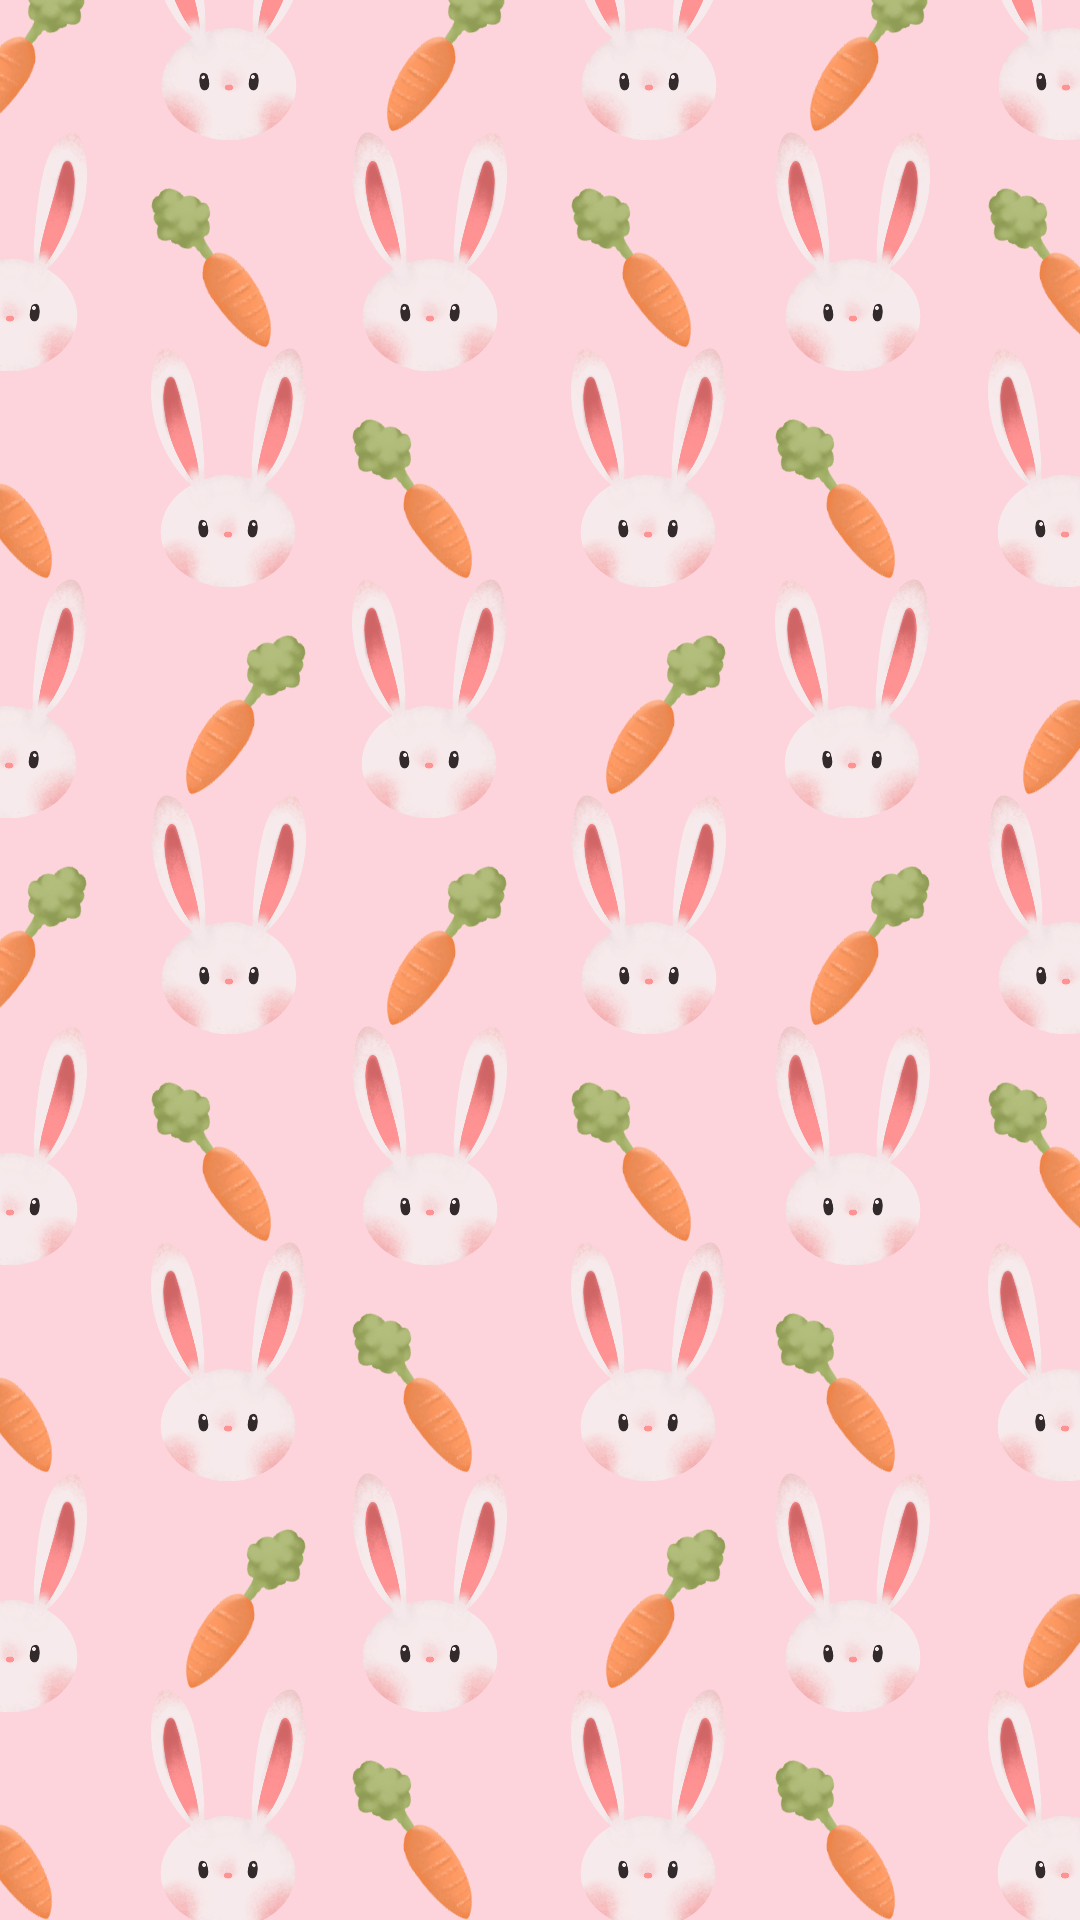 Wallpaper Páscoa by Gocase. Bunny wallpaper, Rabbit wallpaper, Happy easter wallpaper